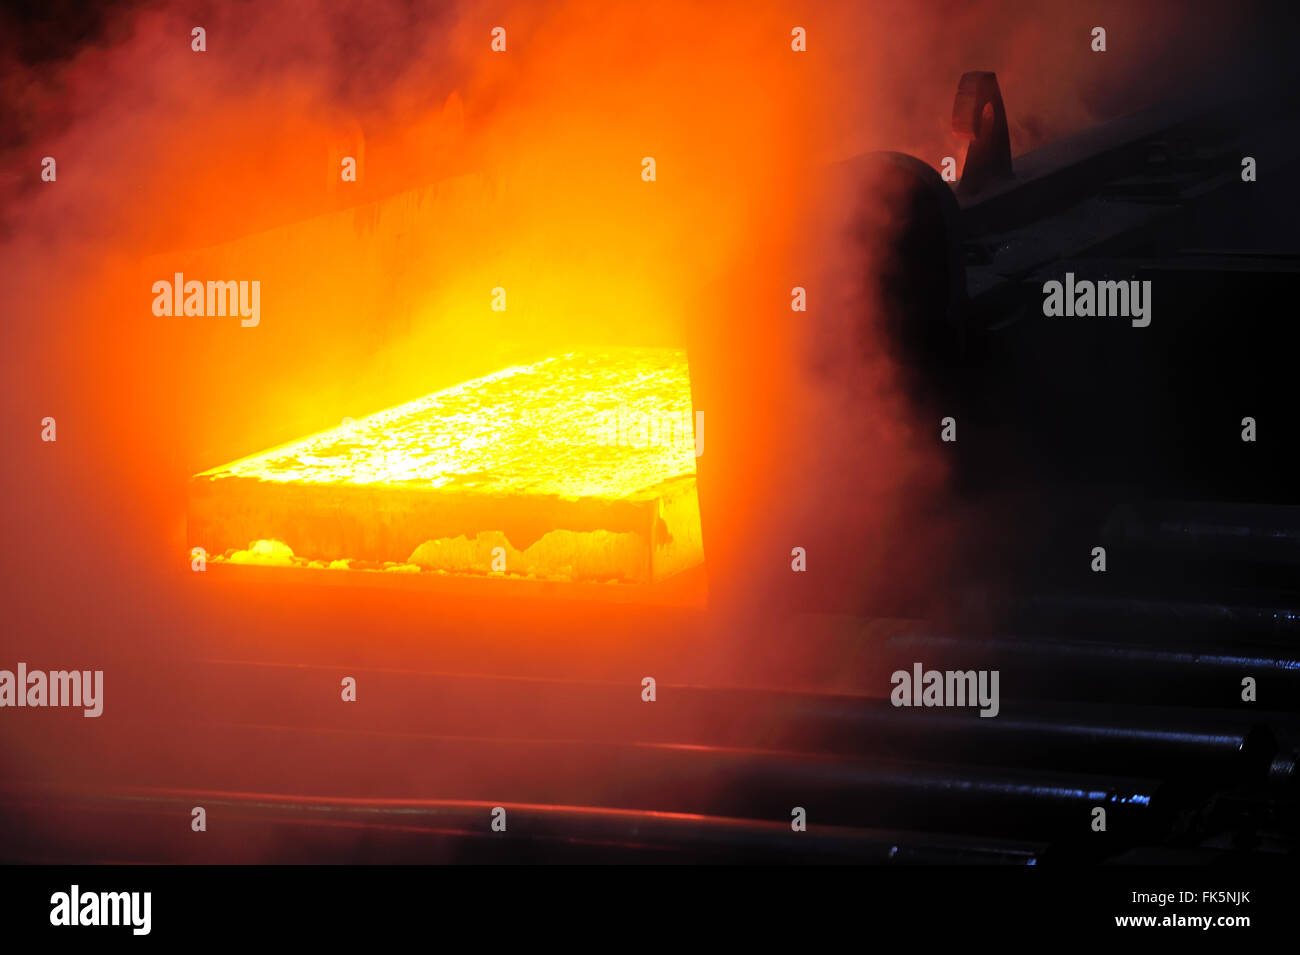 hot steel plate on conveyor in steel mill Stock Photo